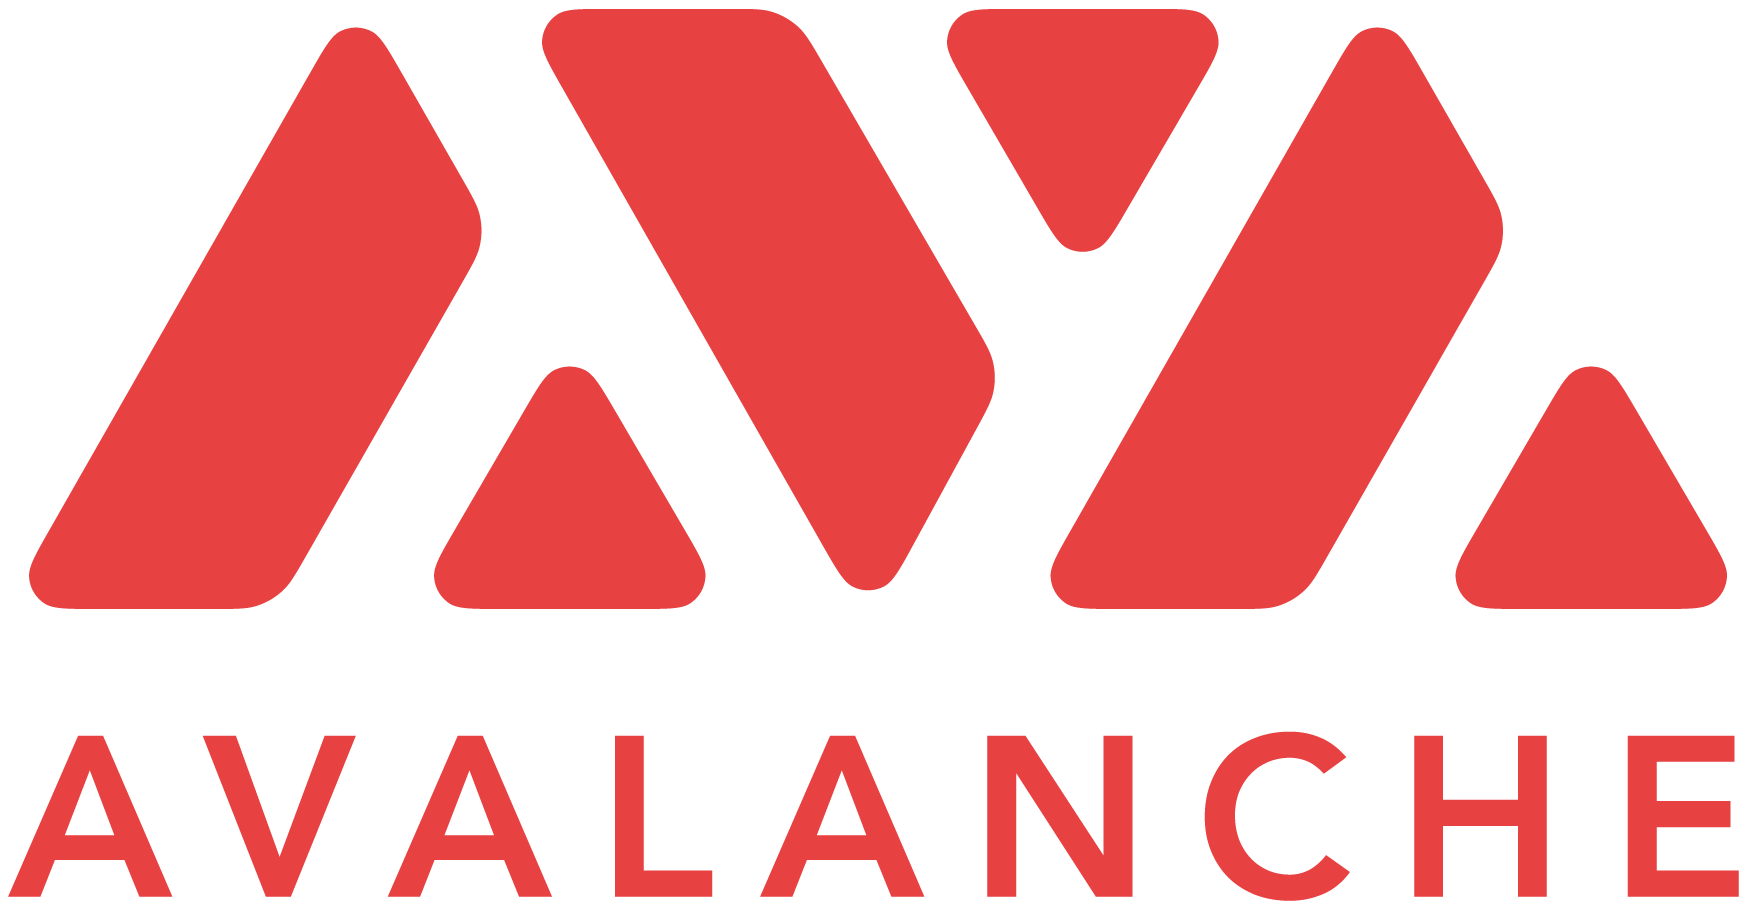 Avalanche logo colors